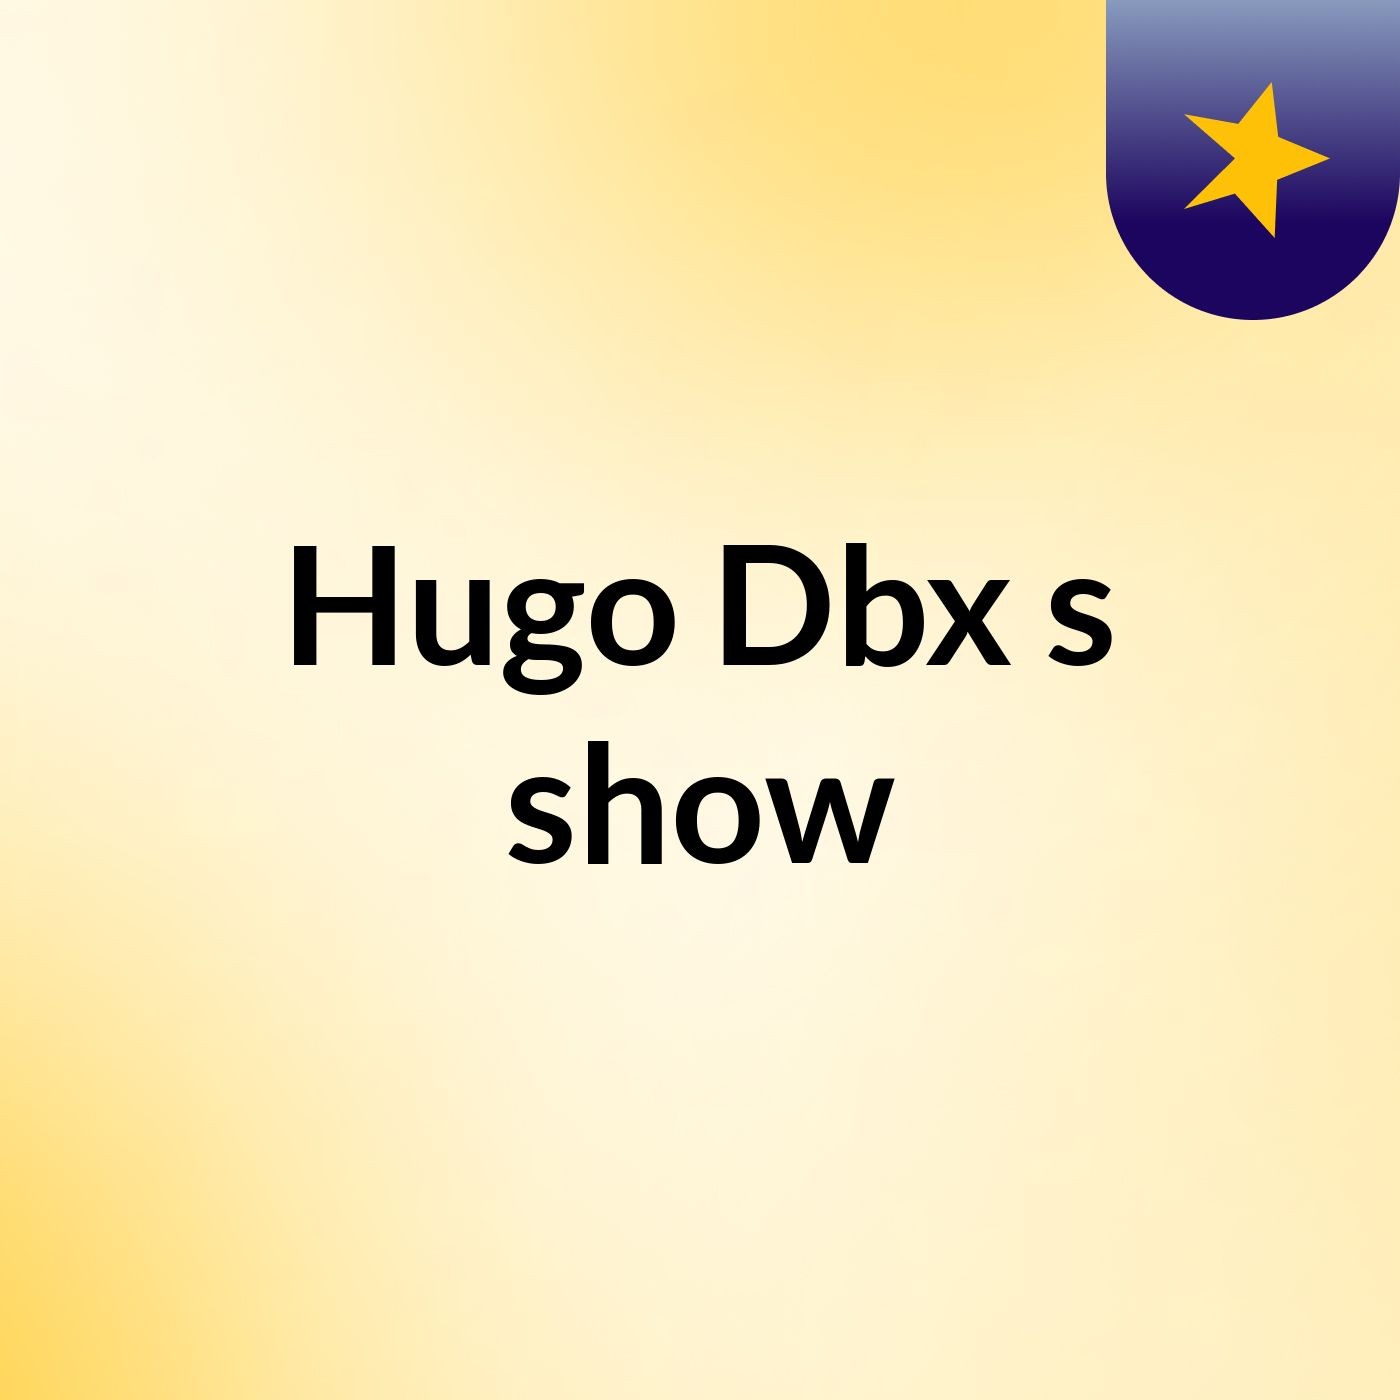 Hugo Dbx's show